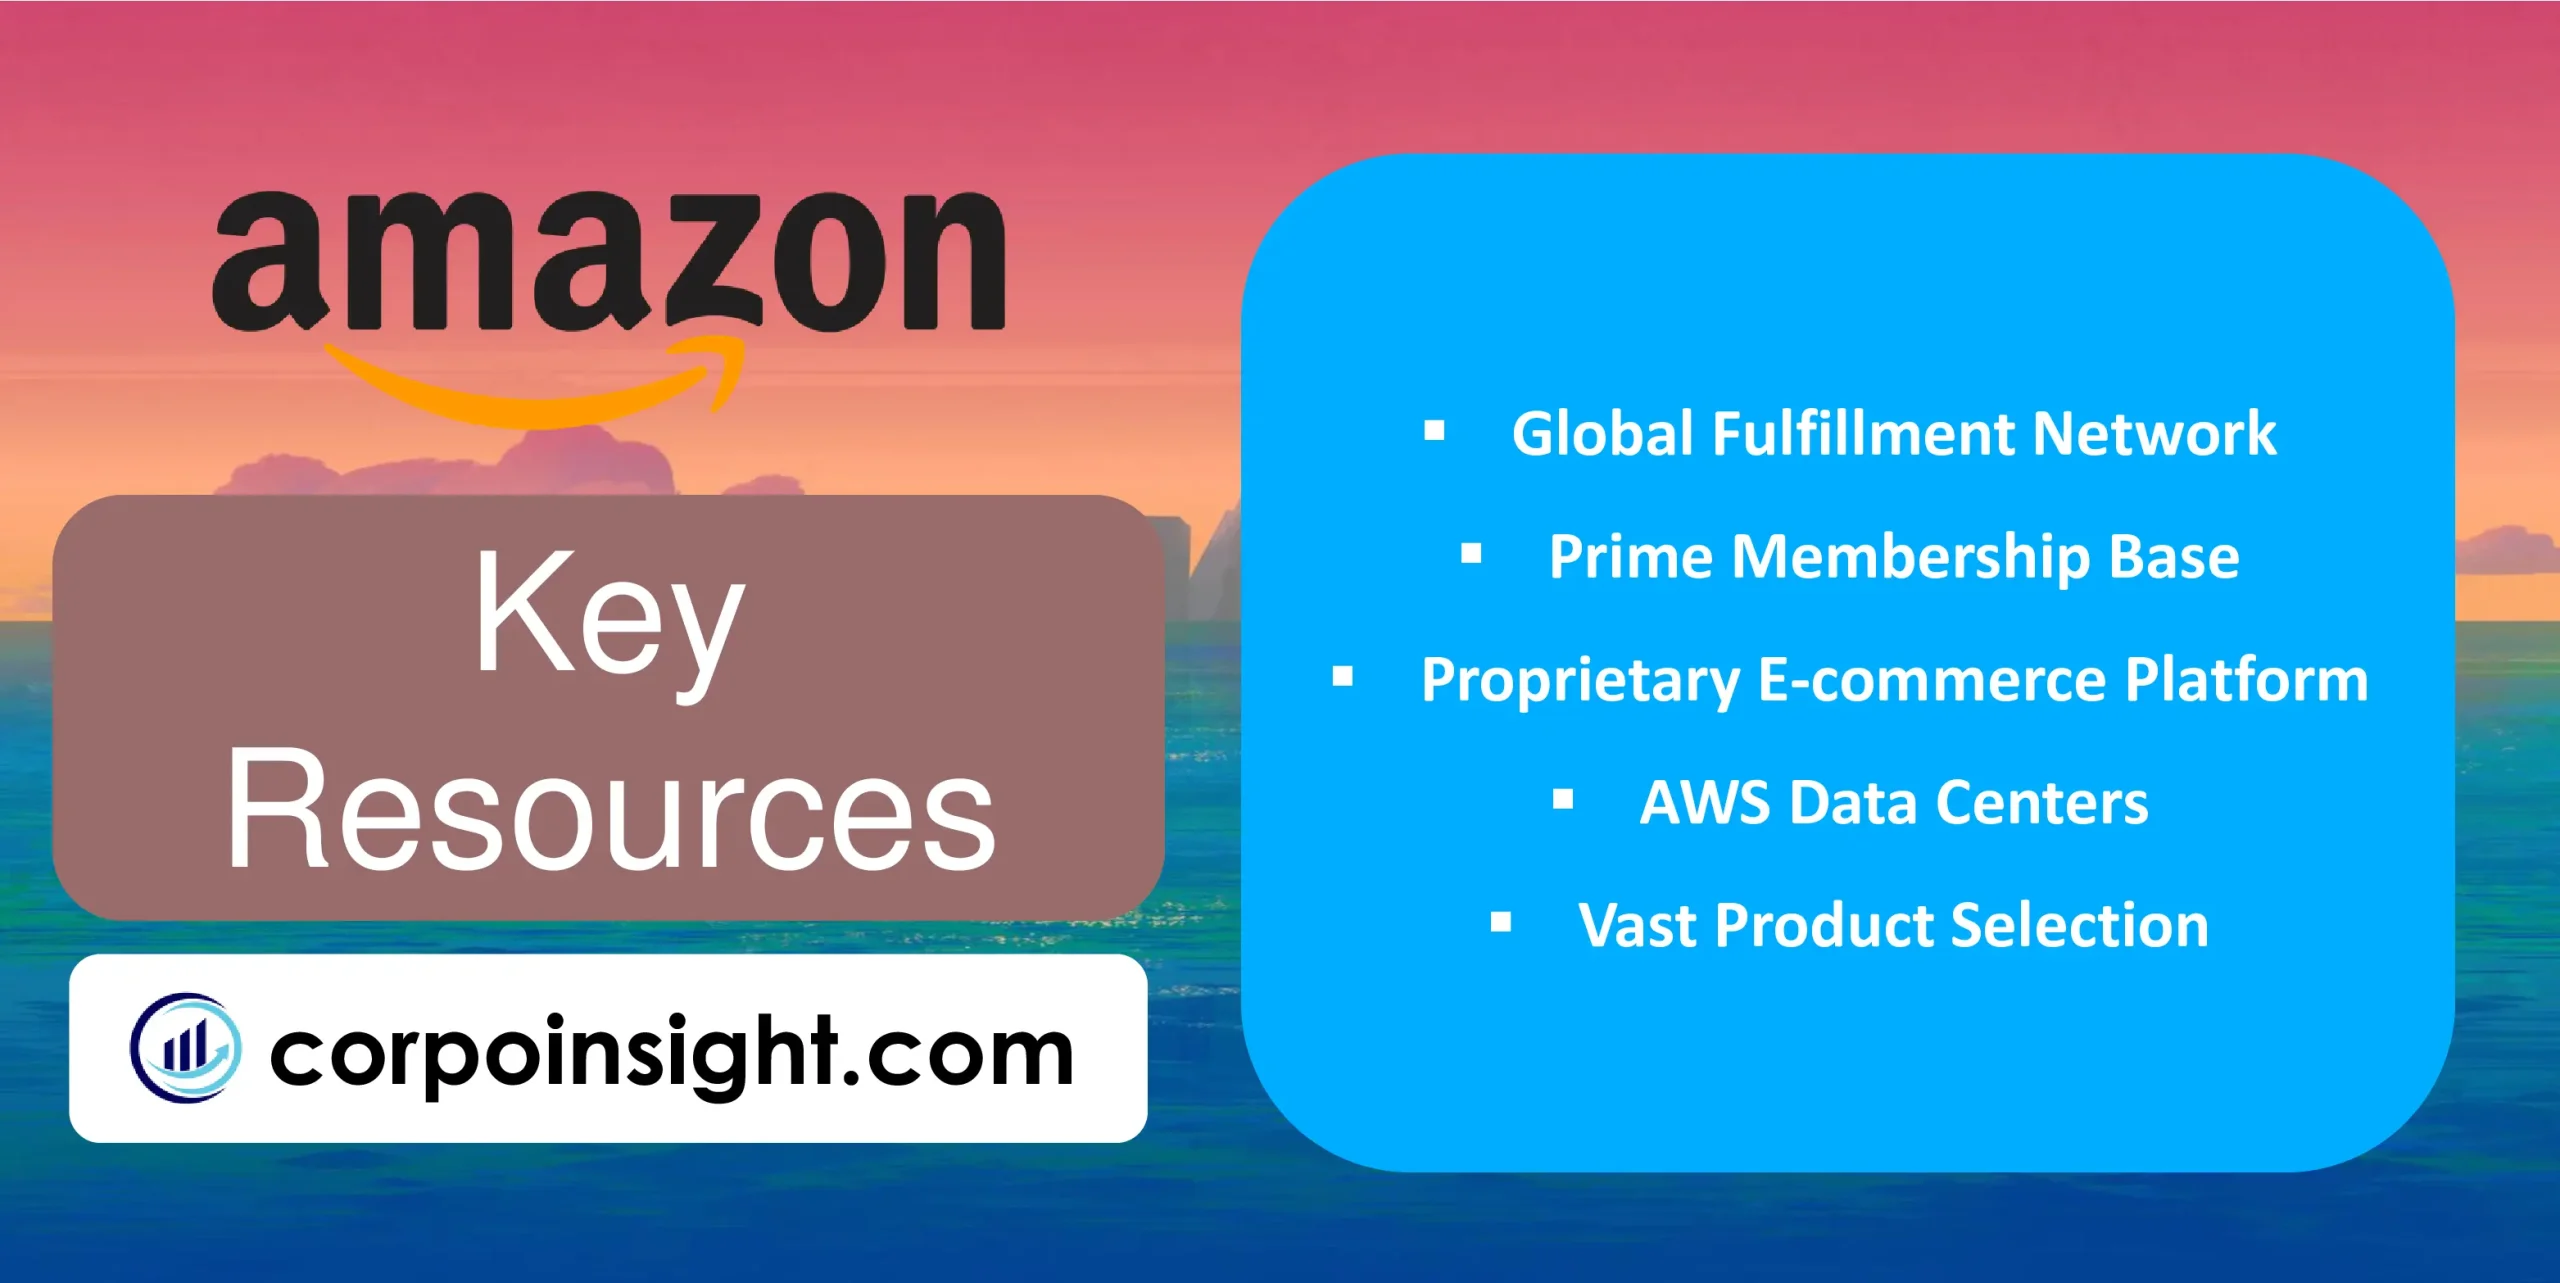 Key Resources of Amazon